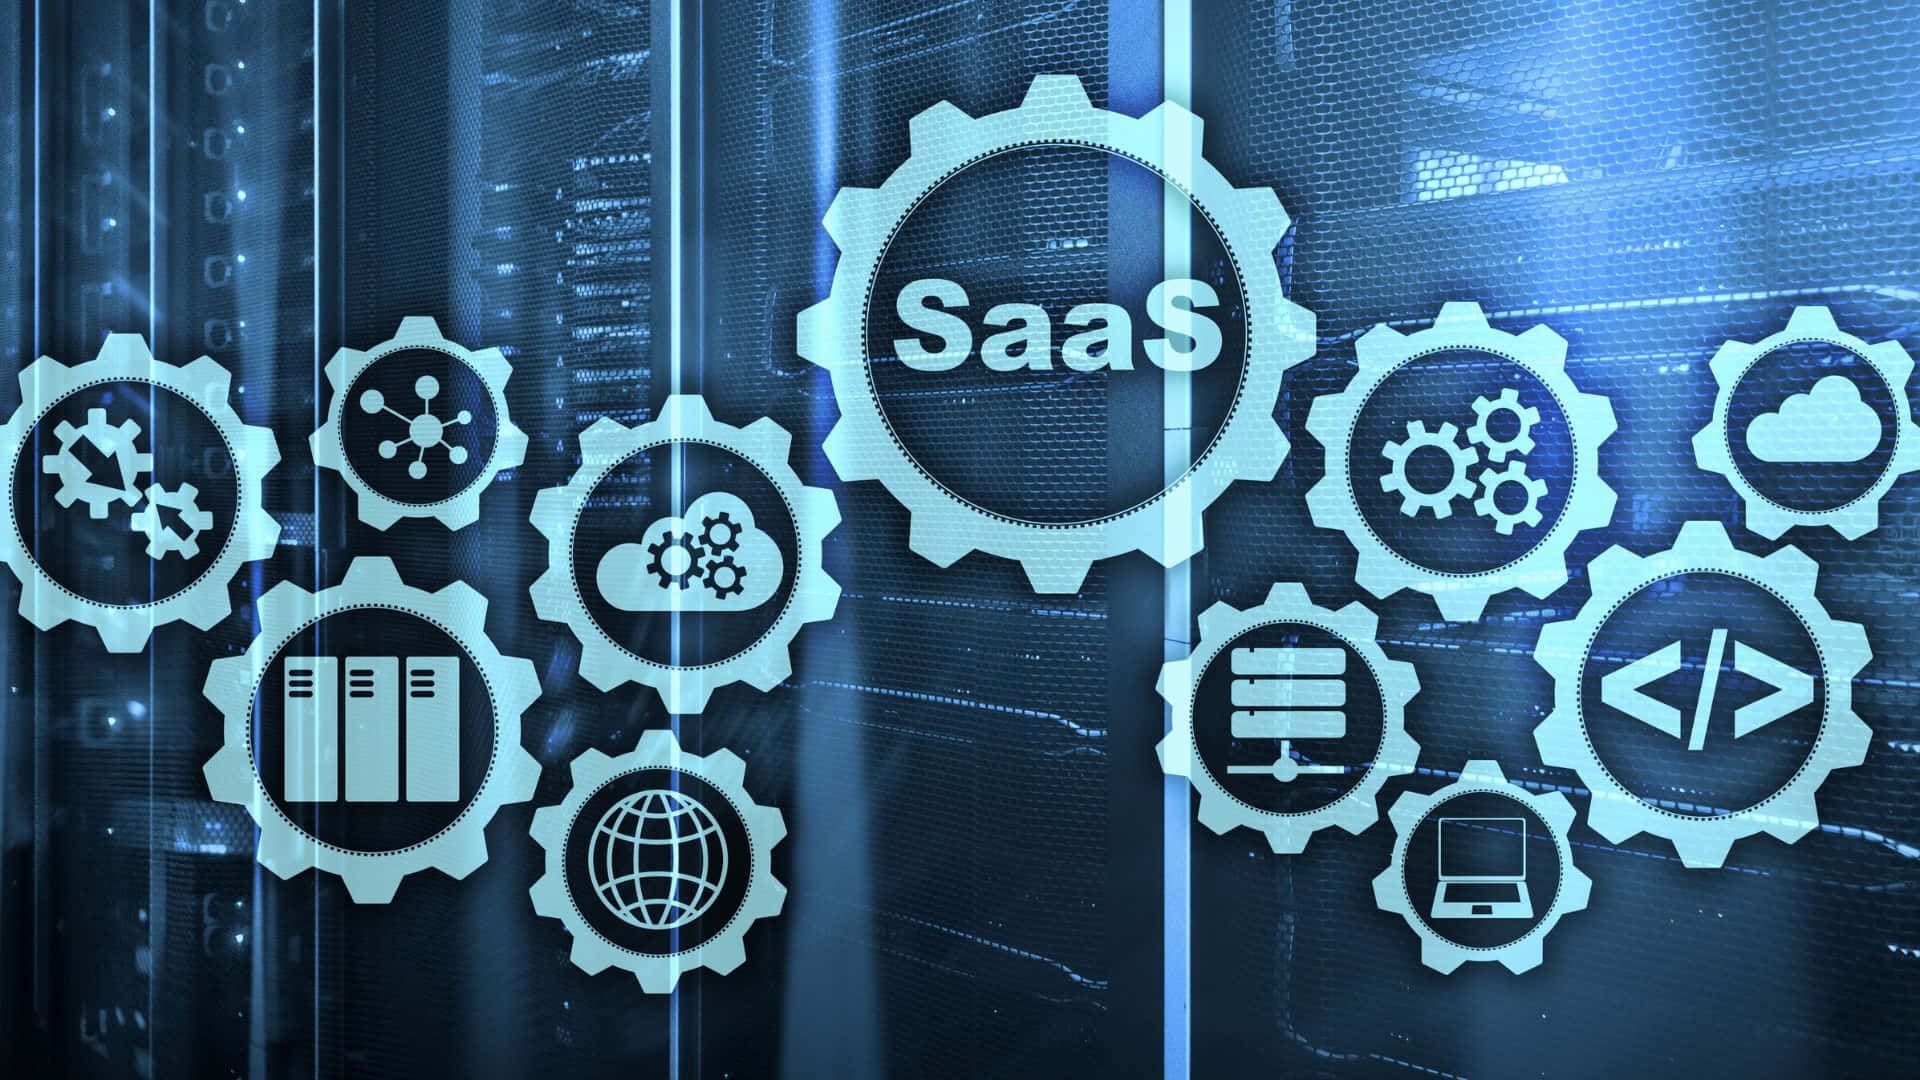 Saa S Softwareasa Service Concept Background